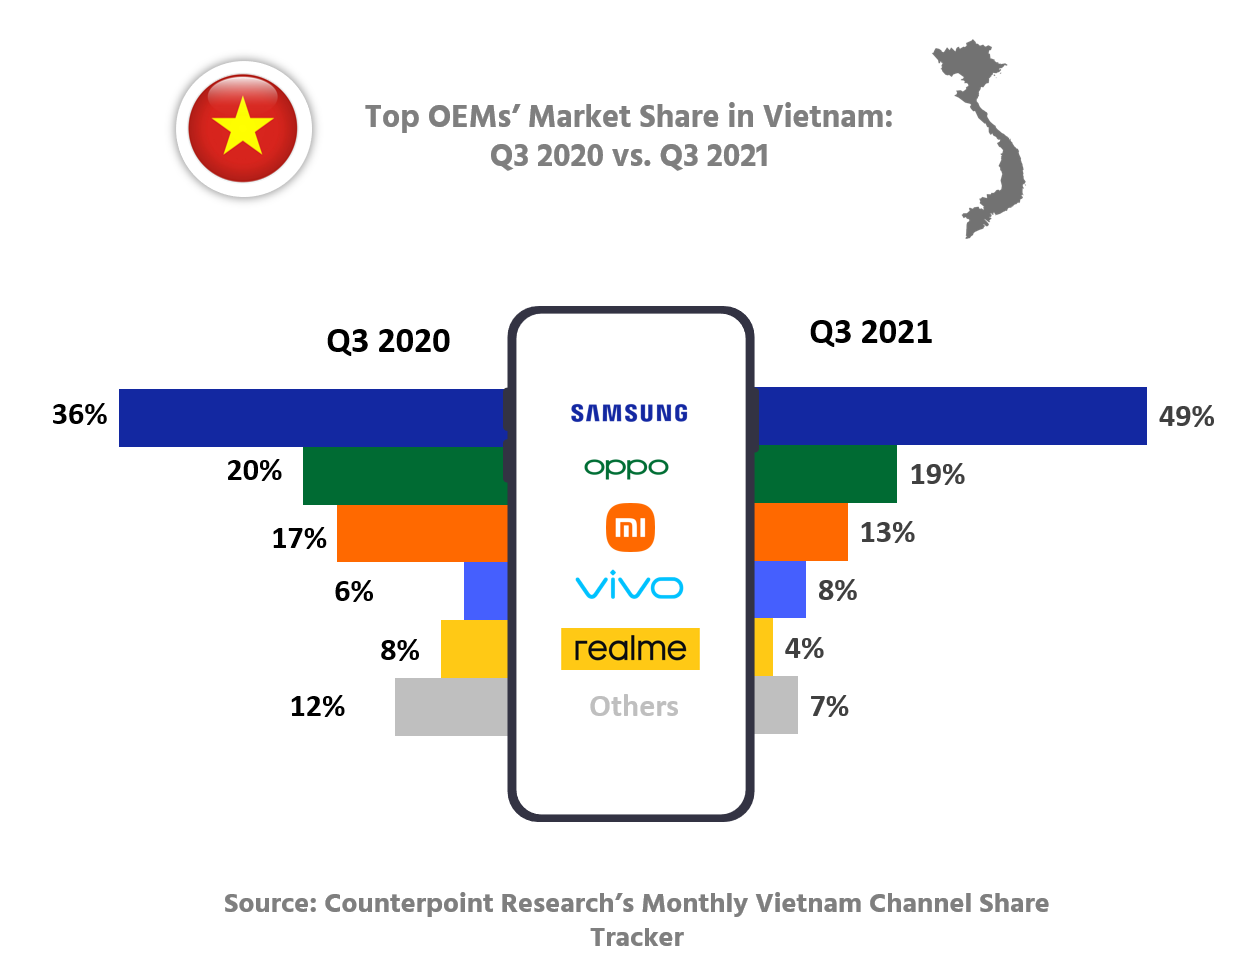 Top OEMs Market Share in Vietnam Q3 2020 vs Q3 2021